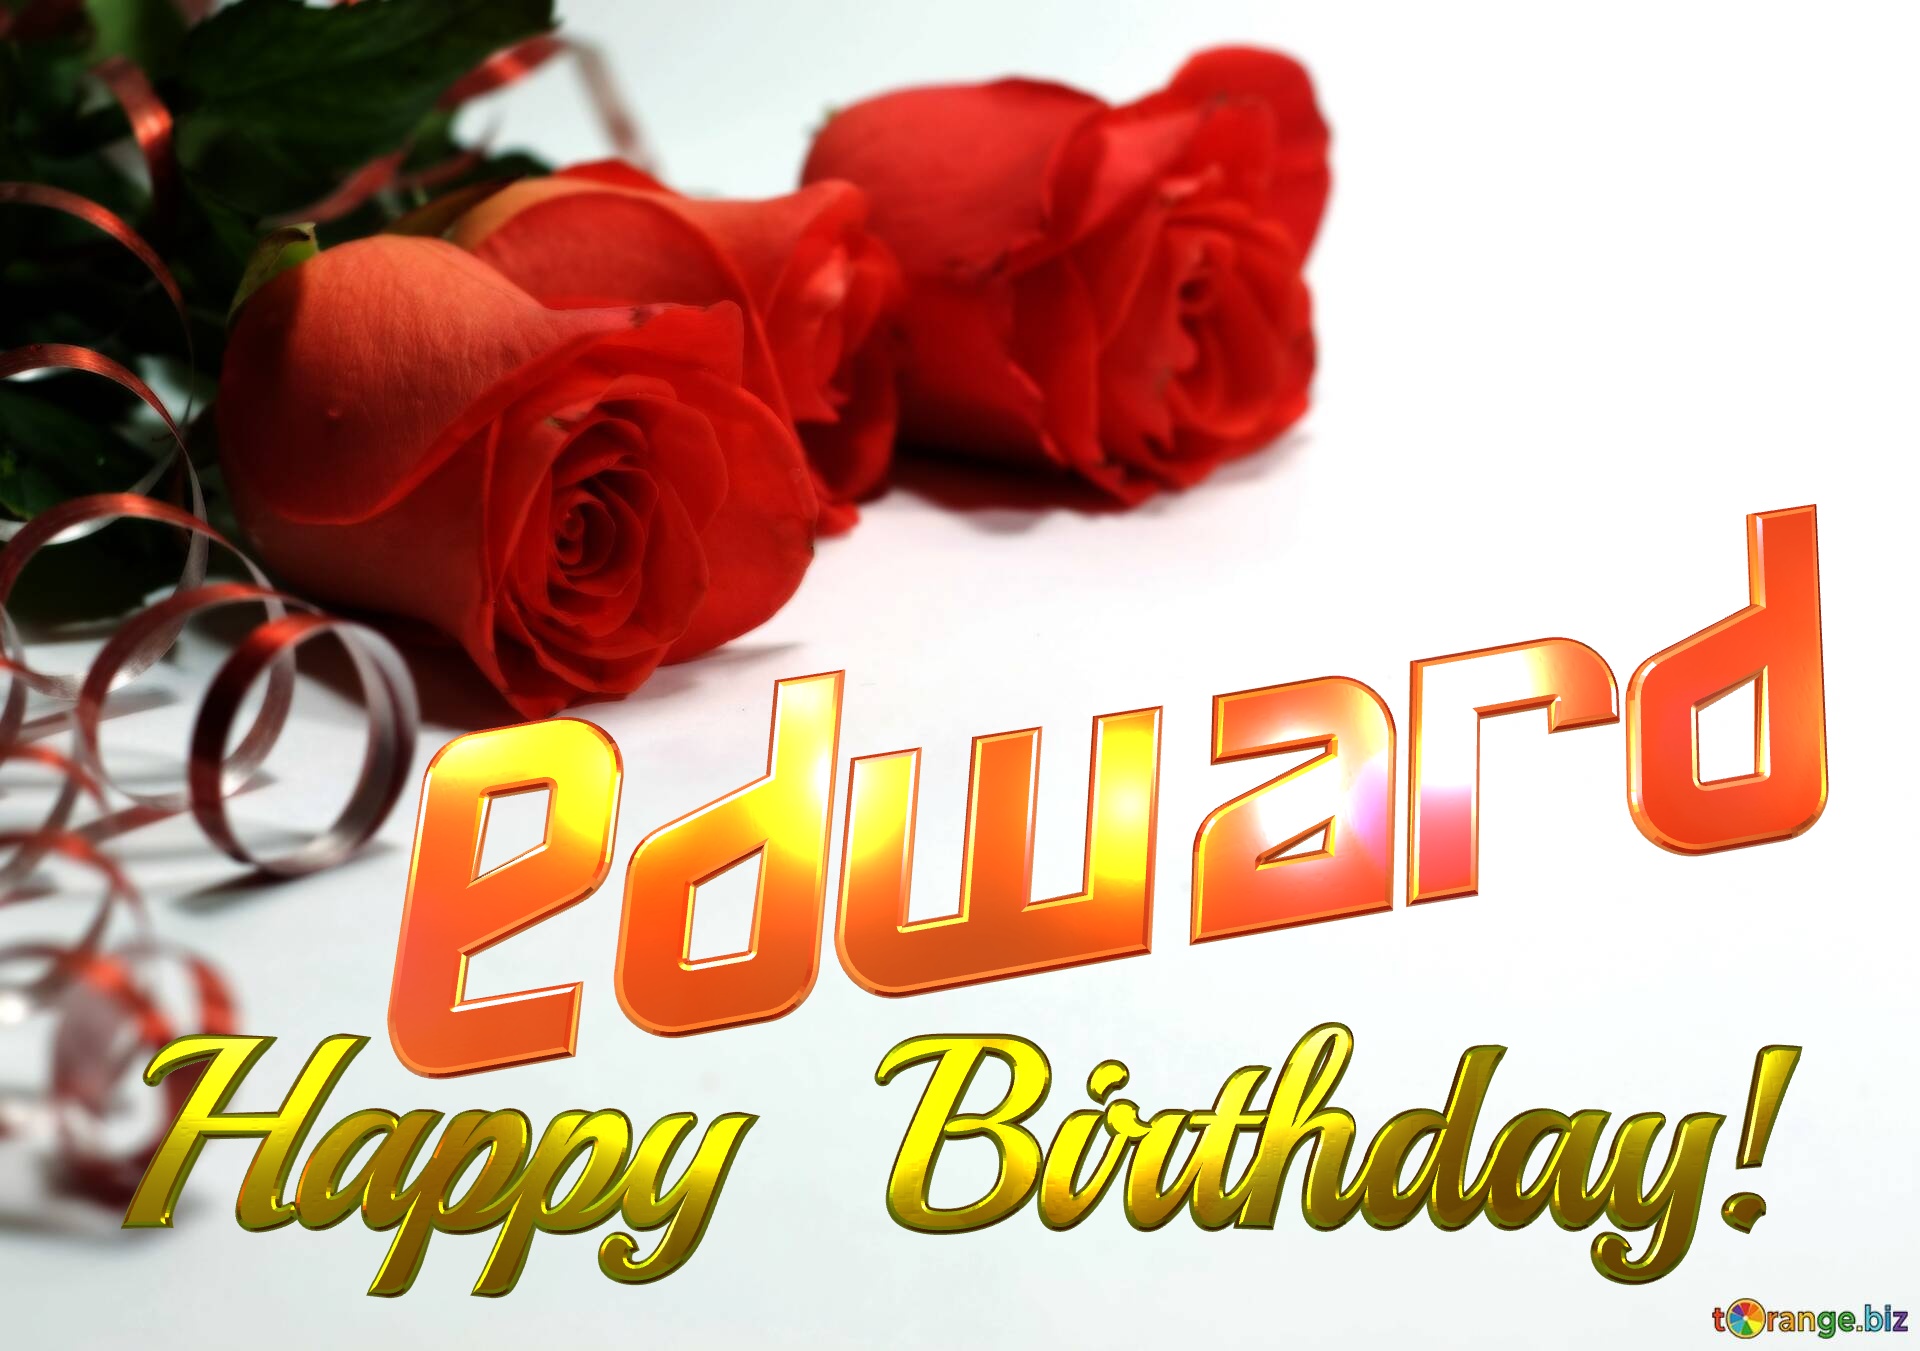 Edward   Birthday   Wishes background №0